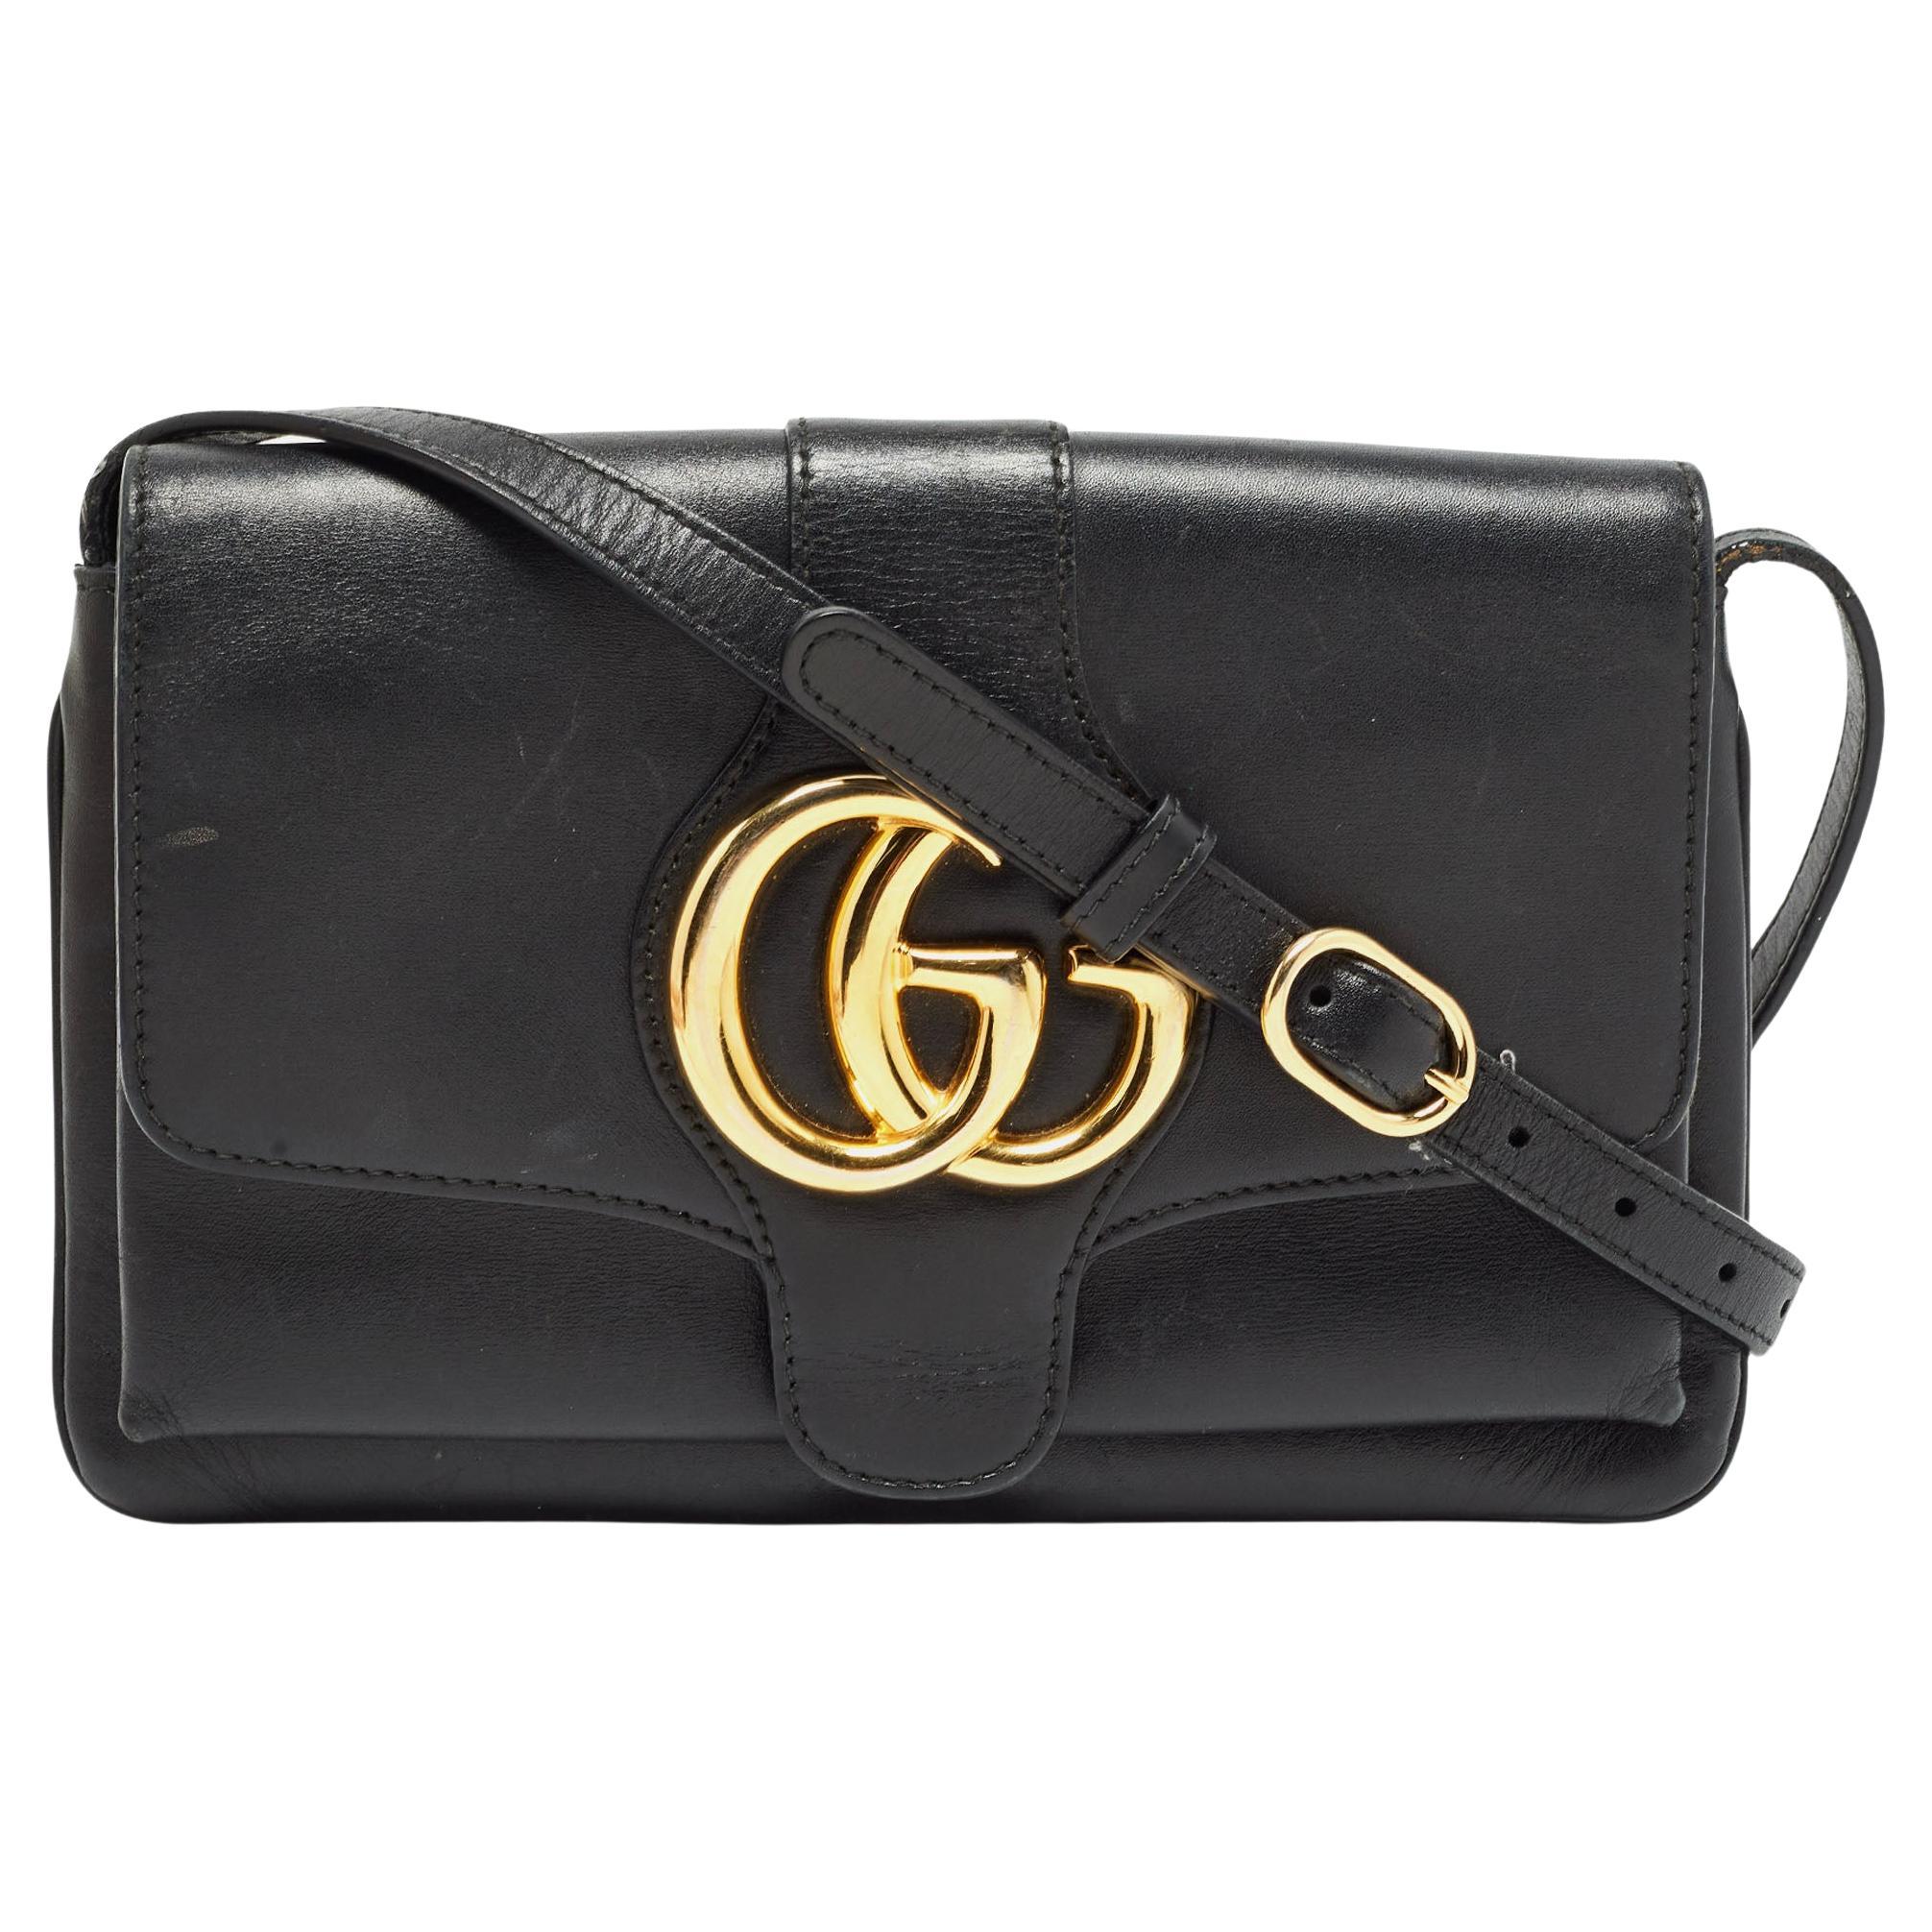 Gucci Black Leather Small Arli Shoulder Bag For Sale